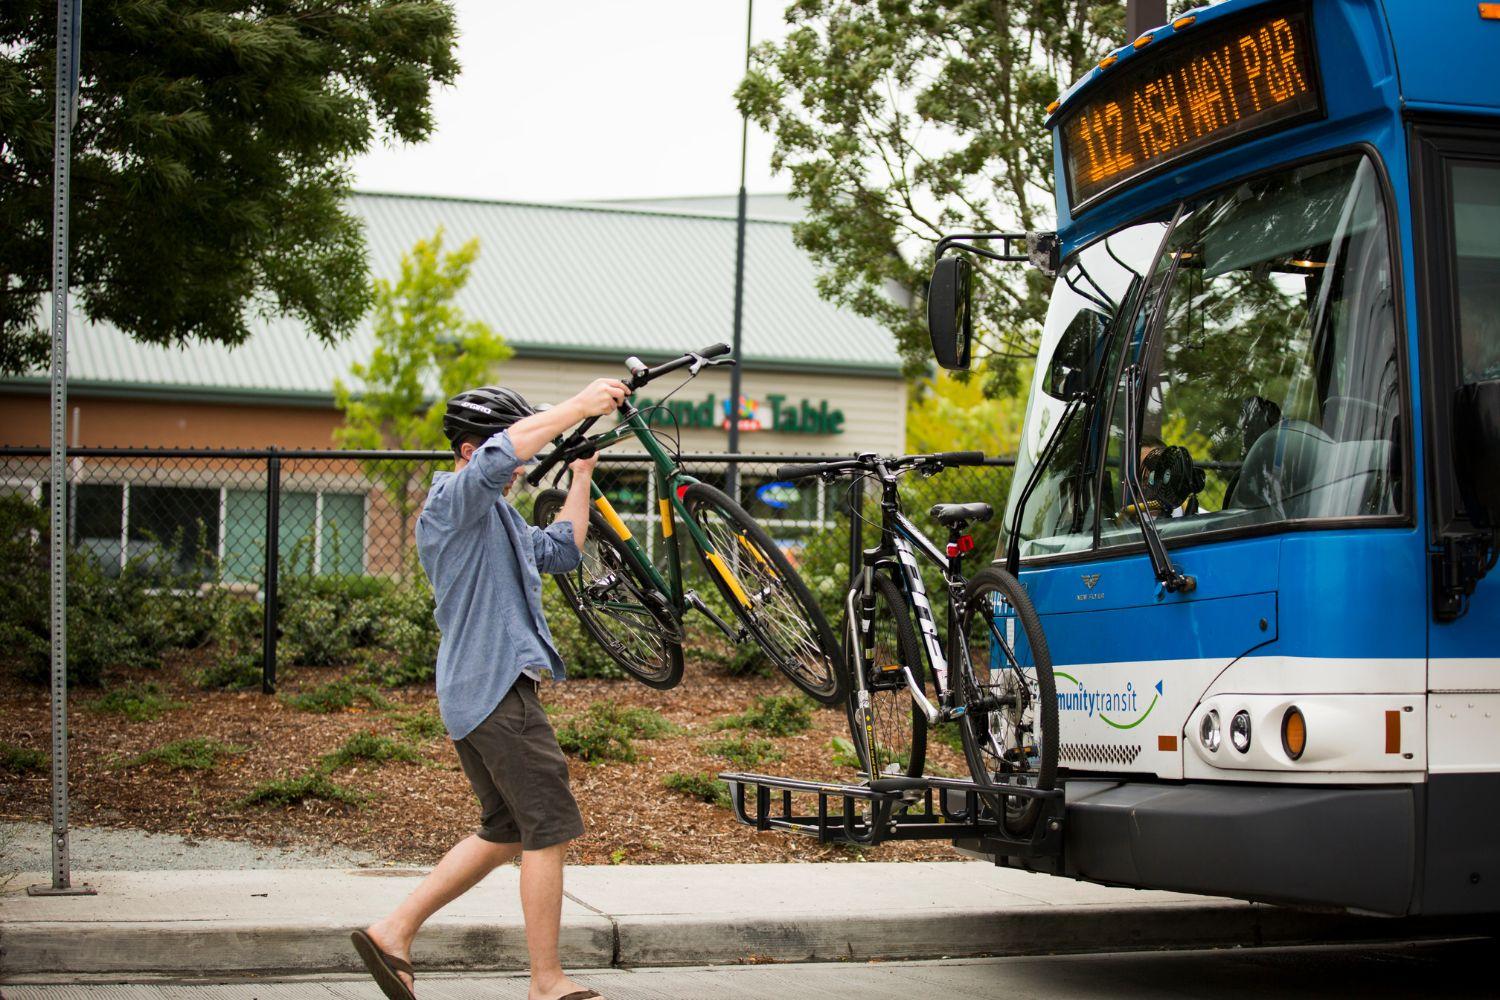 A man loading his bike onto a bus bike rack.